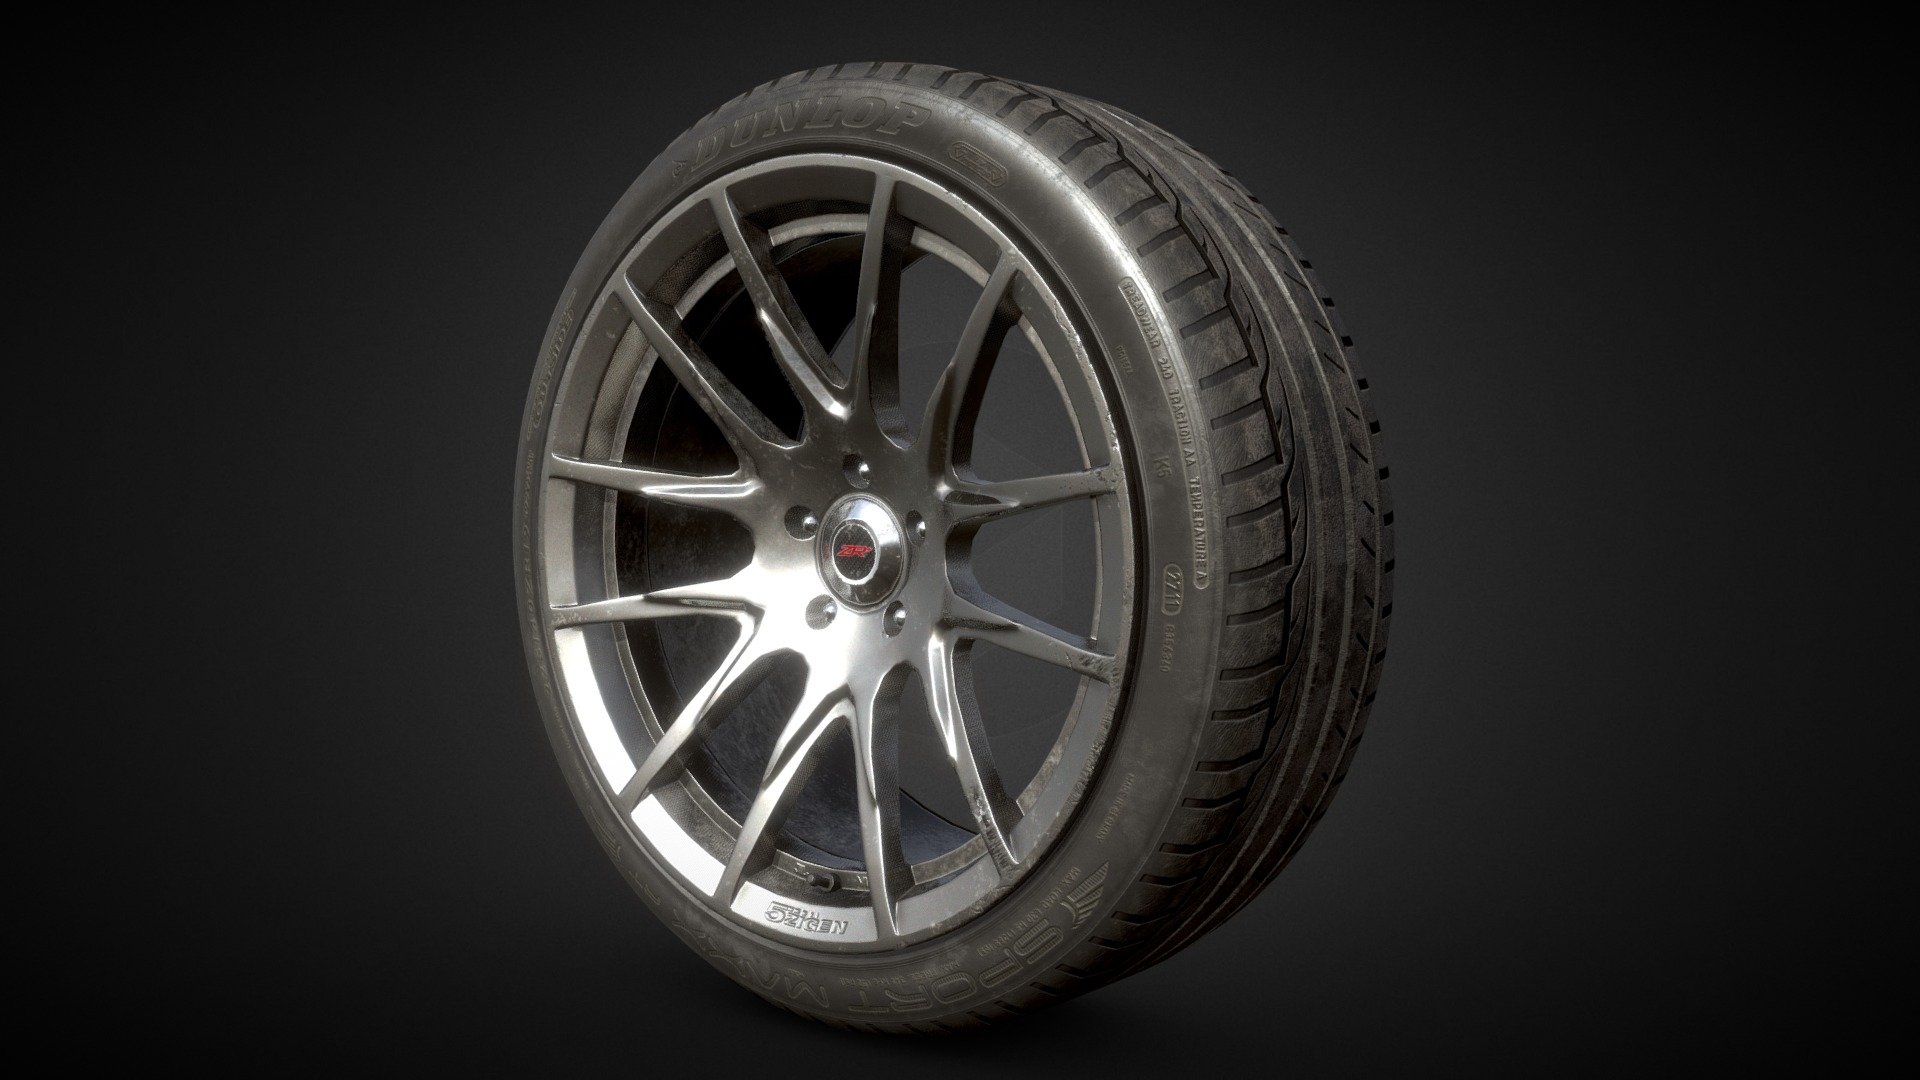 PBR Low Poly 3d model of car rim by 5Zigen - 19'&lsquo;, J9, ET37, 5x114,3. And Dunlop Sport Maxx tire - 225/40 R19 3d model